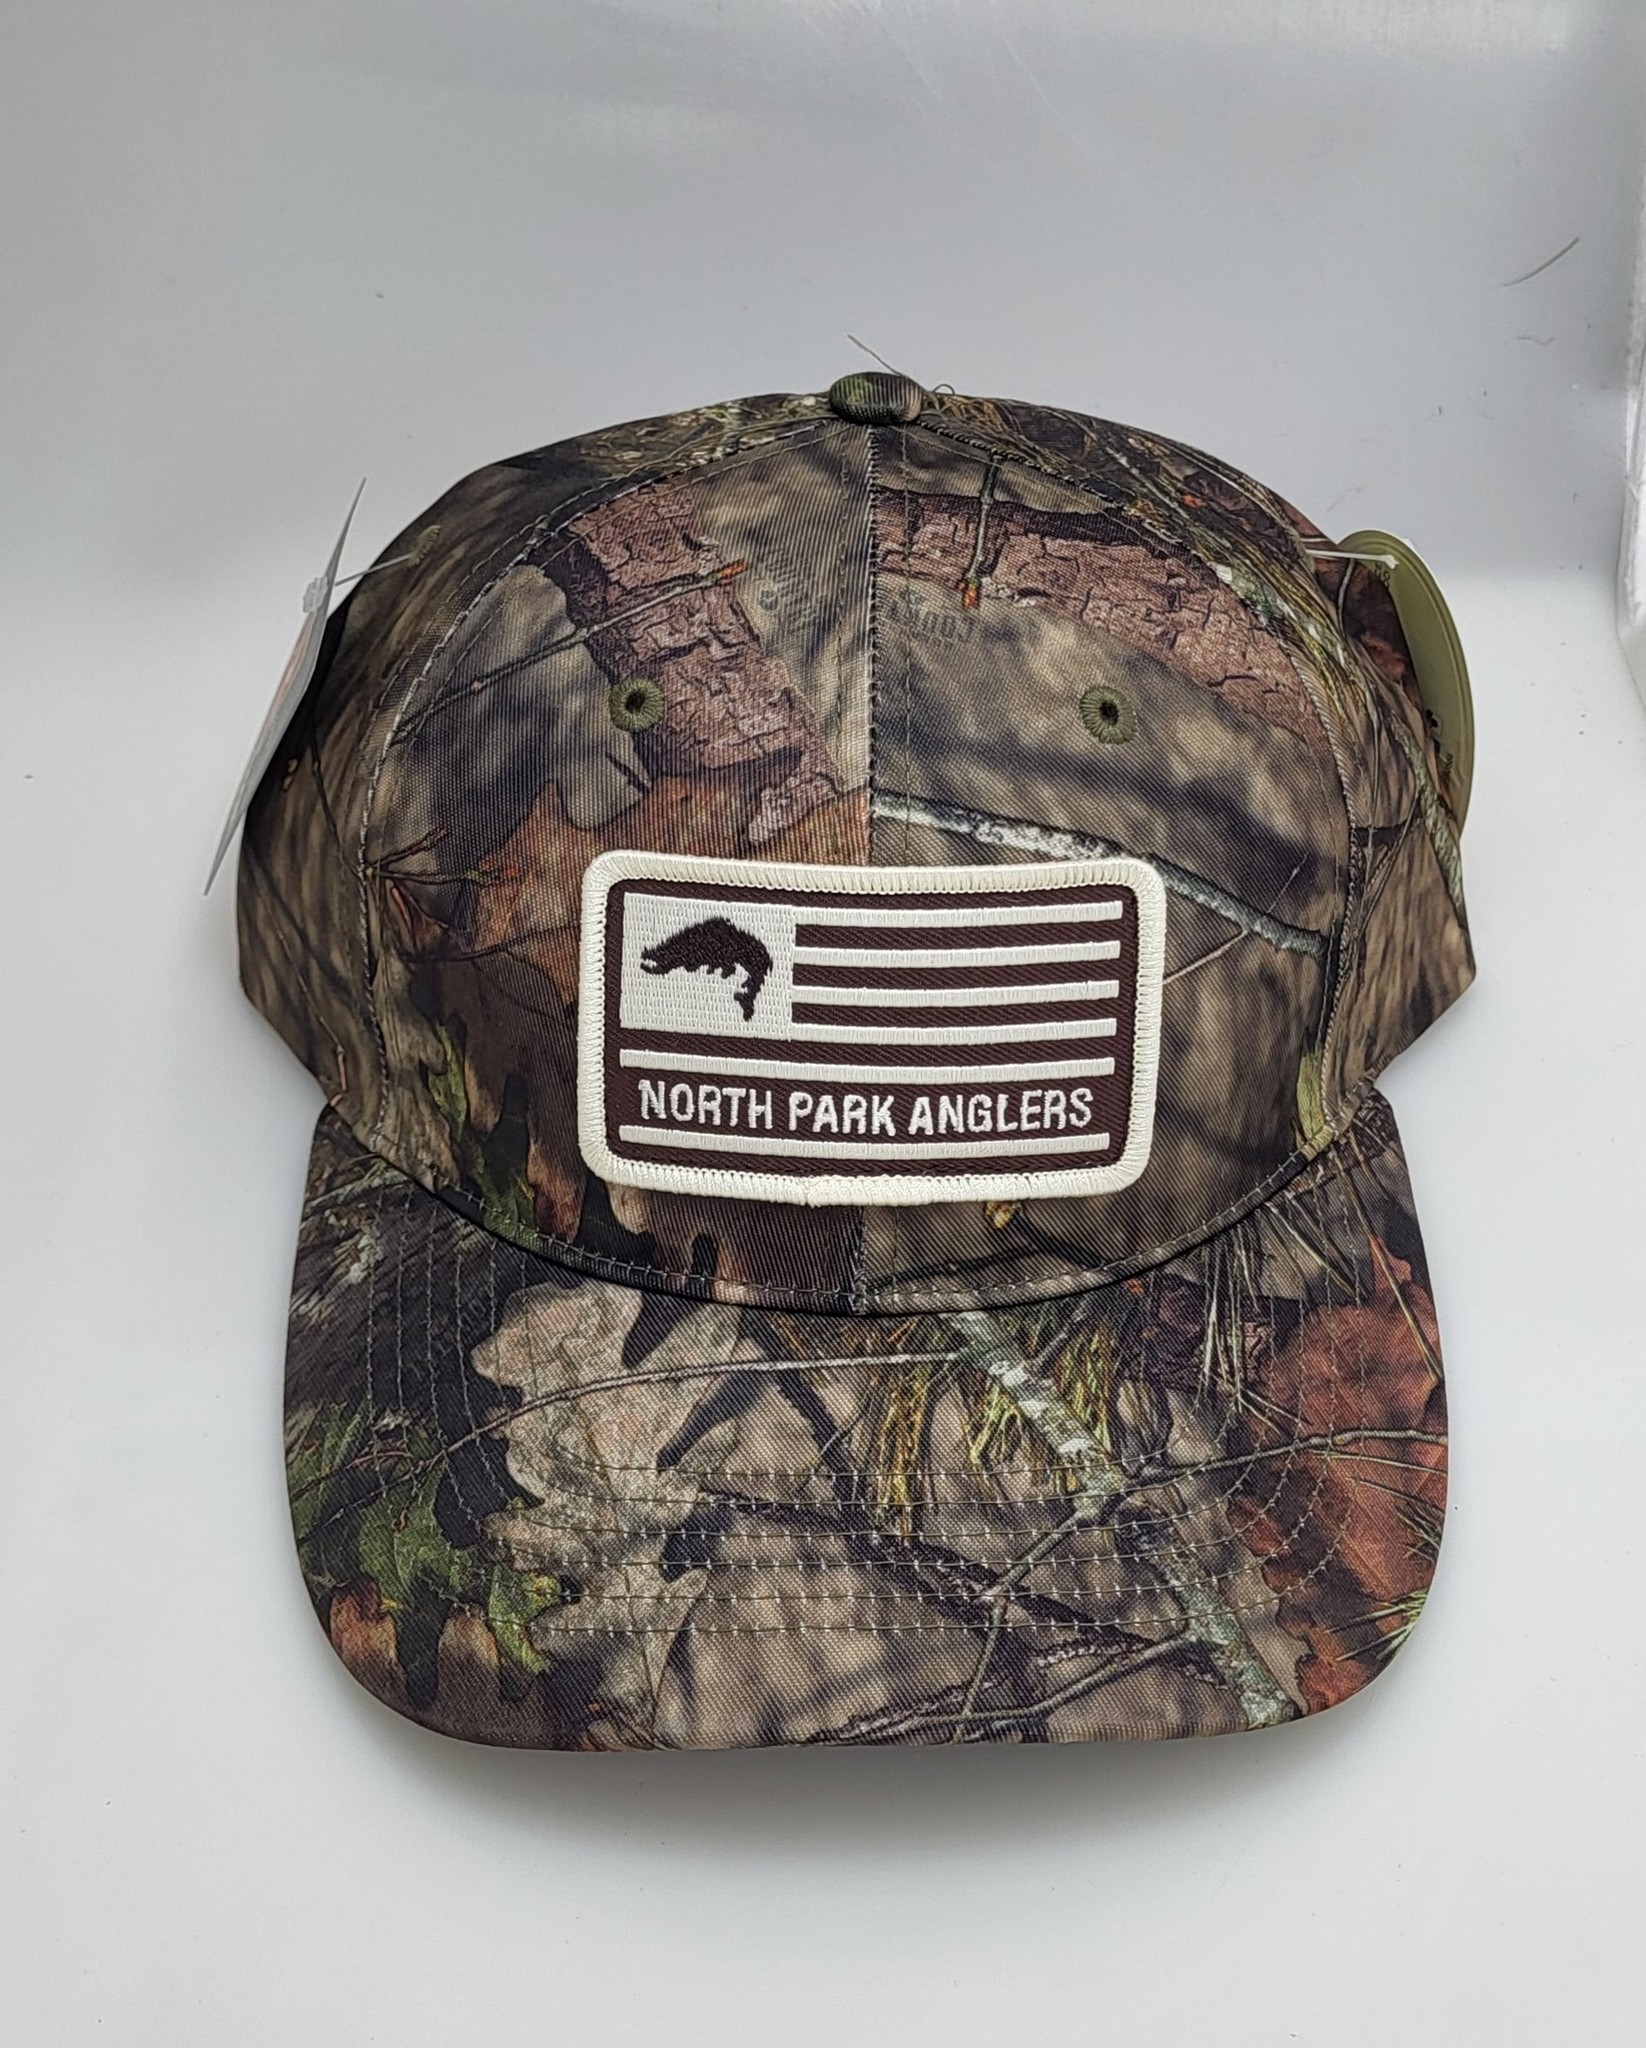 https://cdn.shoplightspeed.com/shops/612746/files/53983277/richardson-npa-hats-with-trout-flag.jpg